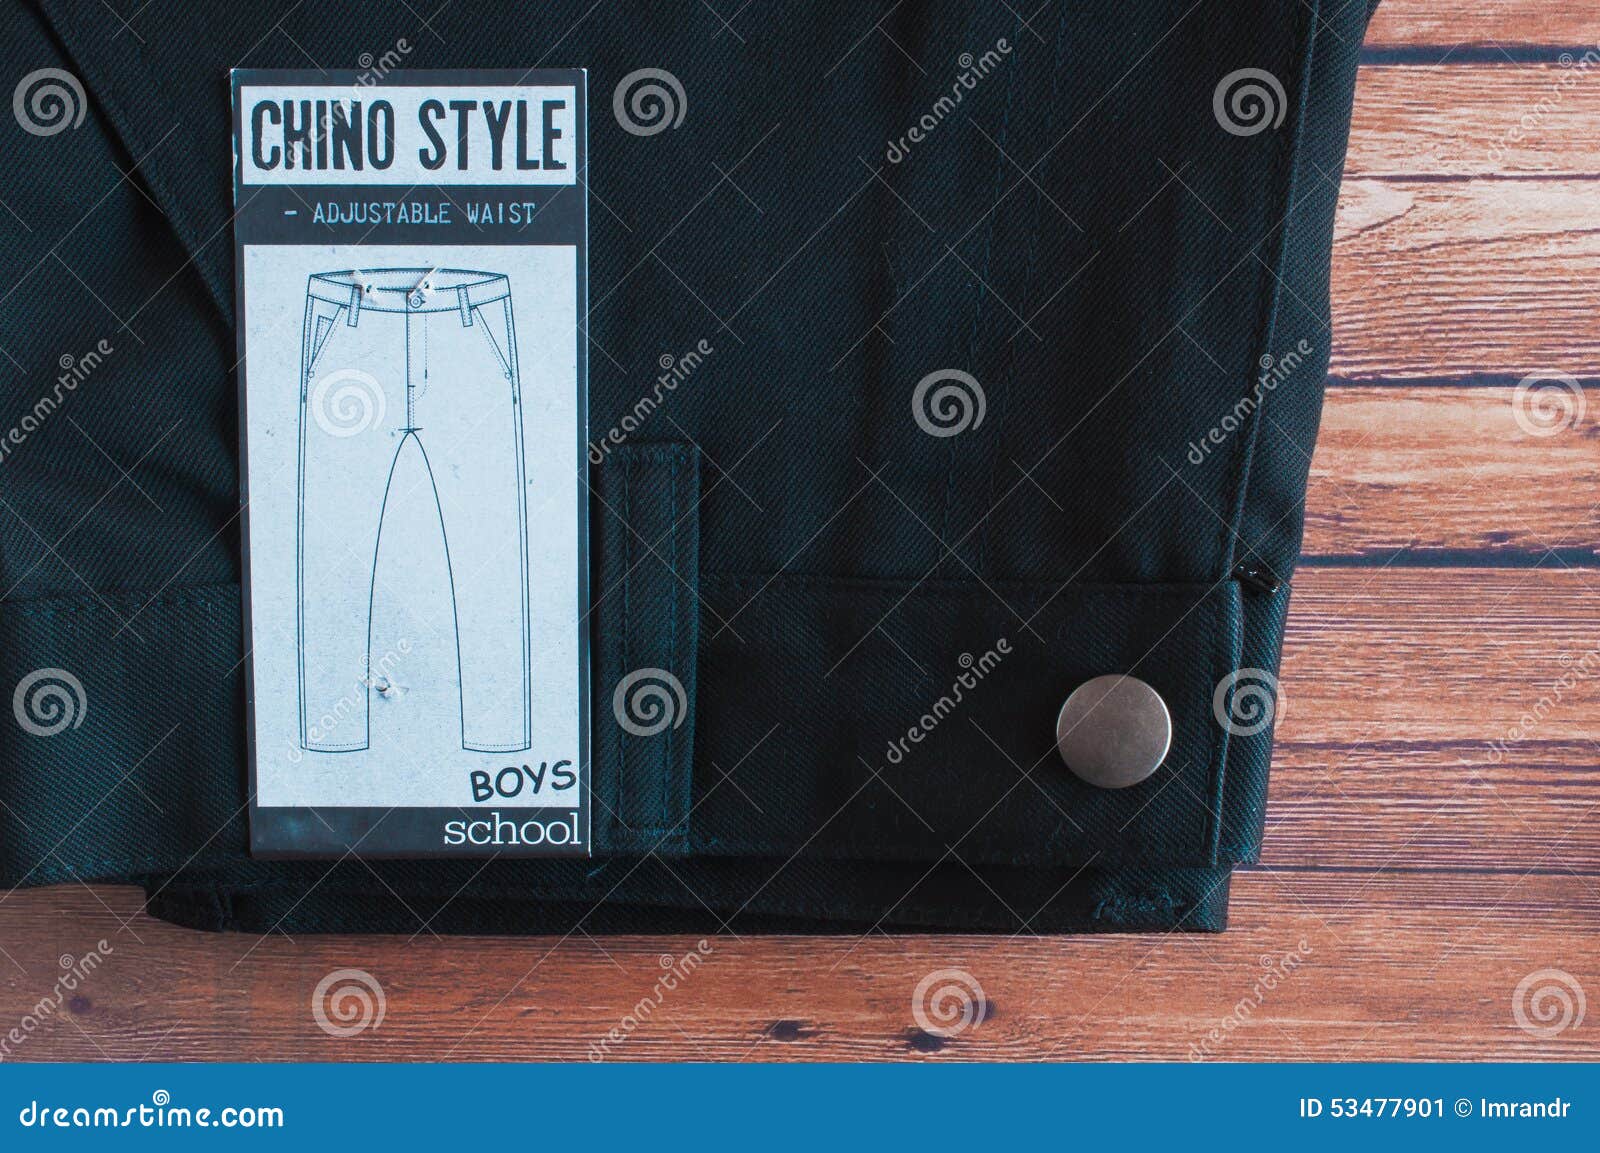 black chino style school trouser